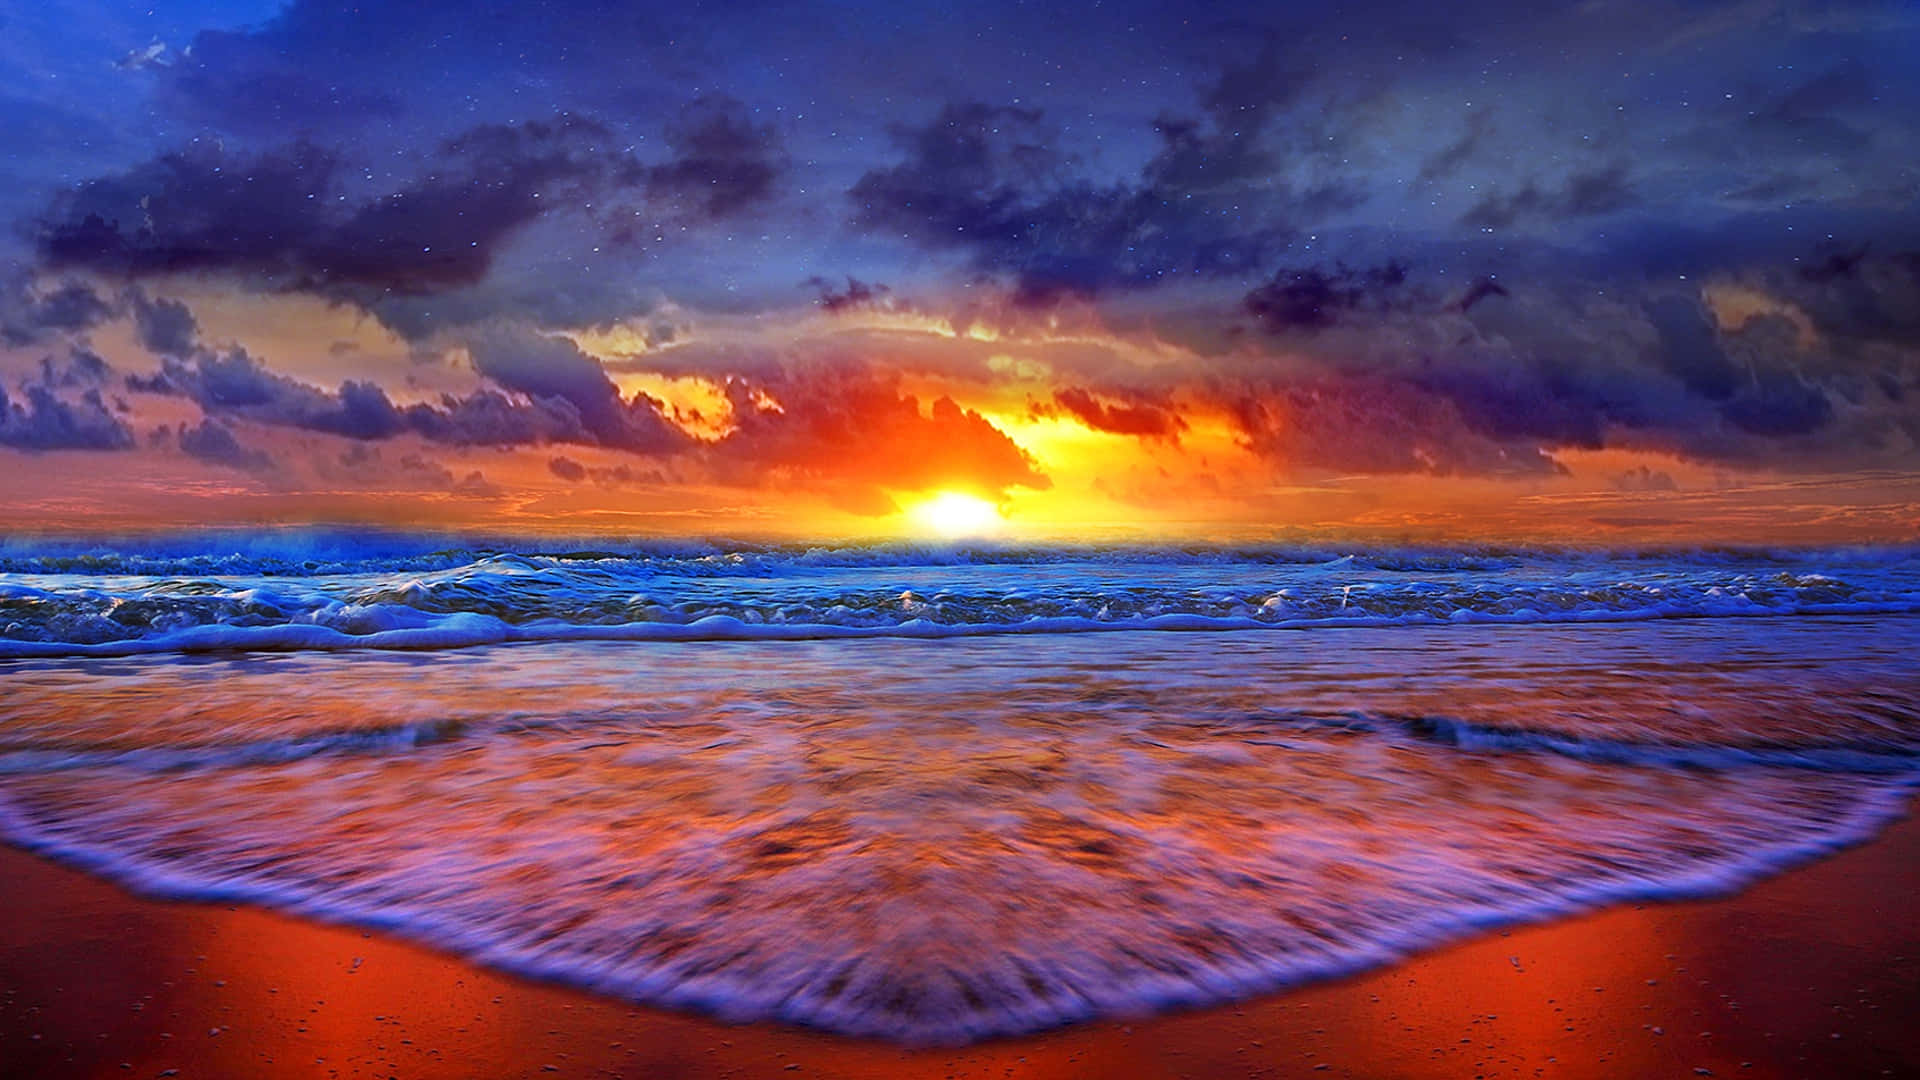 “Take in the Beautiful Hawaii Sunset” Wallpaper